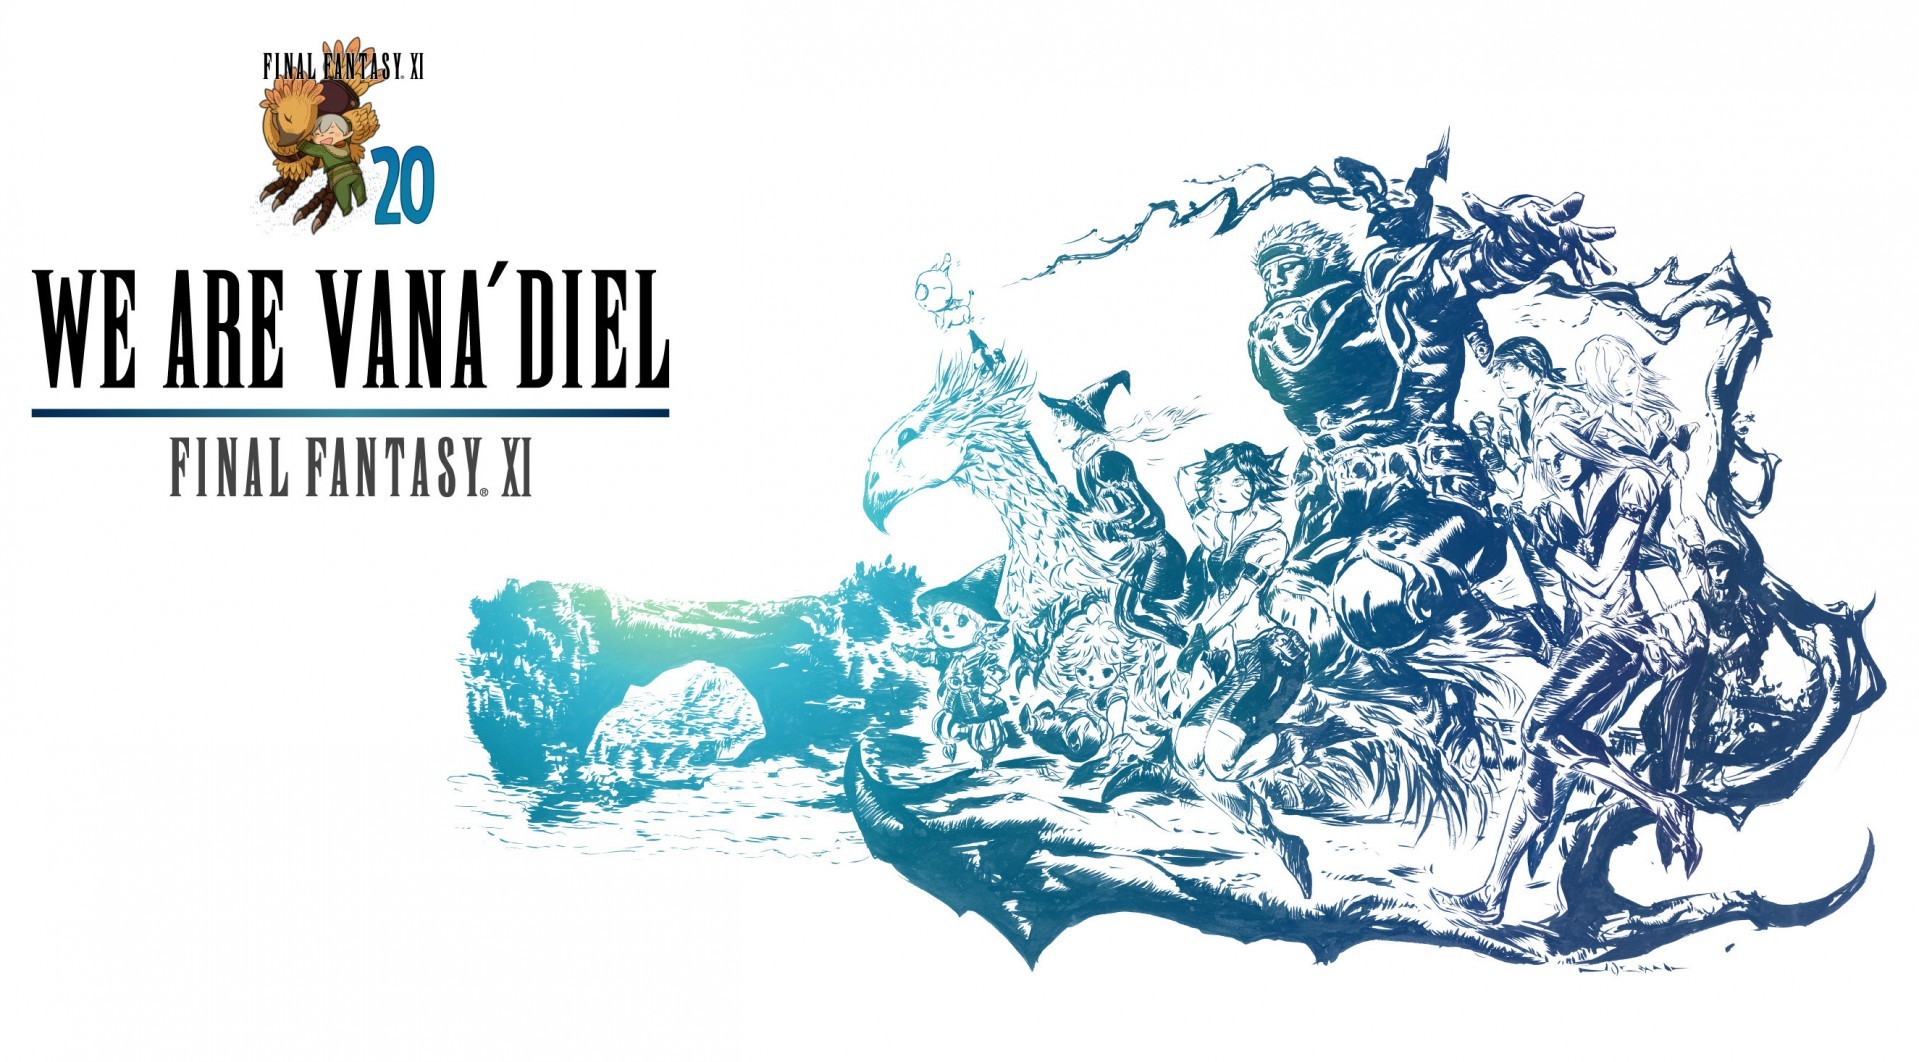 《Final Fantasy》系列首款線上遊戲《Final Fantasy XI》今日營運屆滿 20 周年